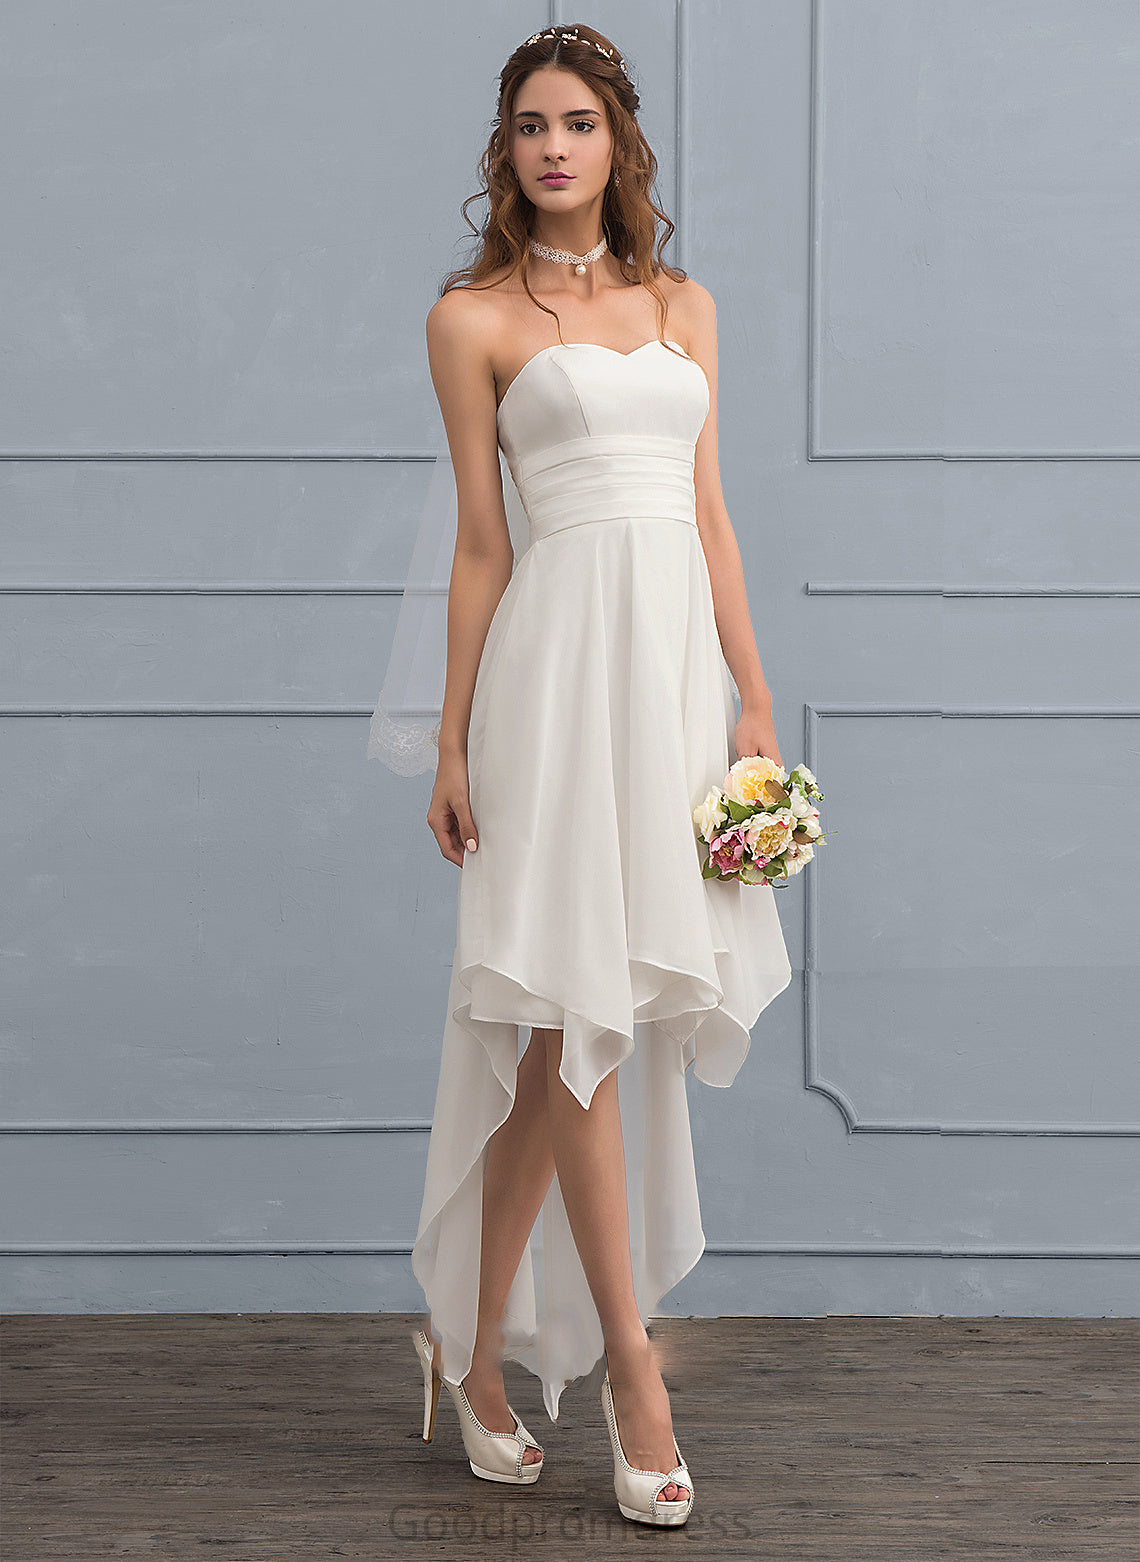 Ruffle Asymmetrical Wedding Dresses A-Line Chiffon With Dress Wedding Sweetheart Trudie